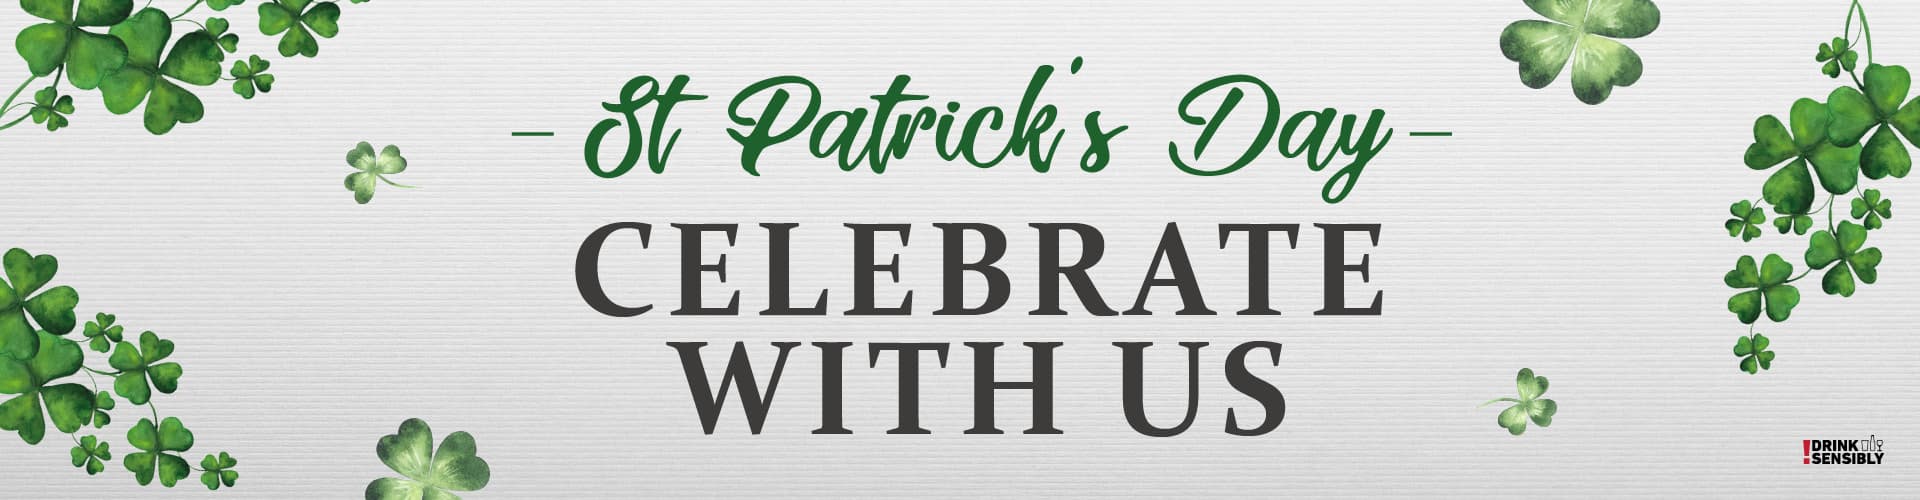 Celebrate St Patrick's Day in Farnborough